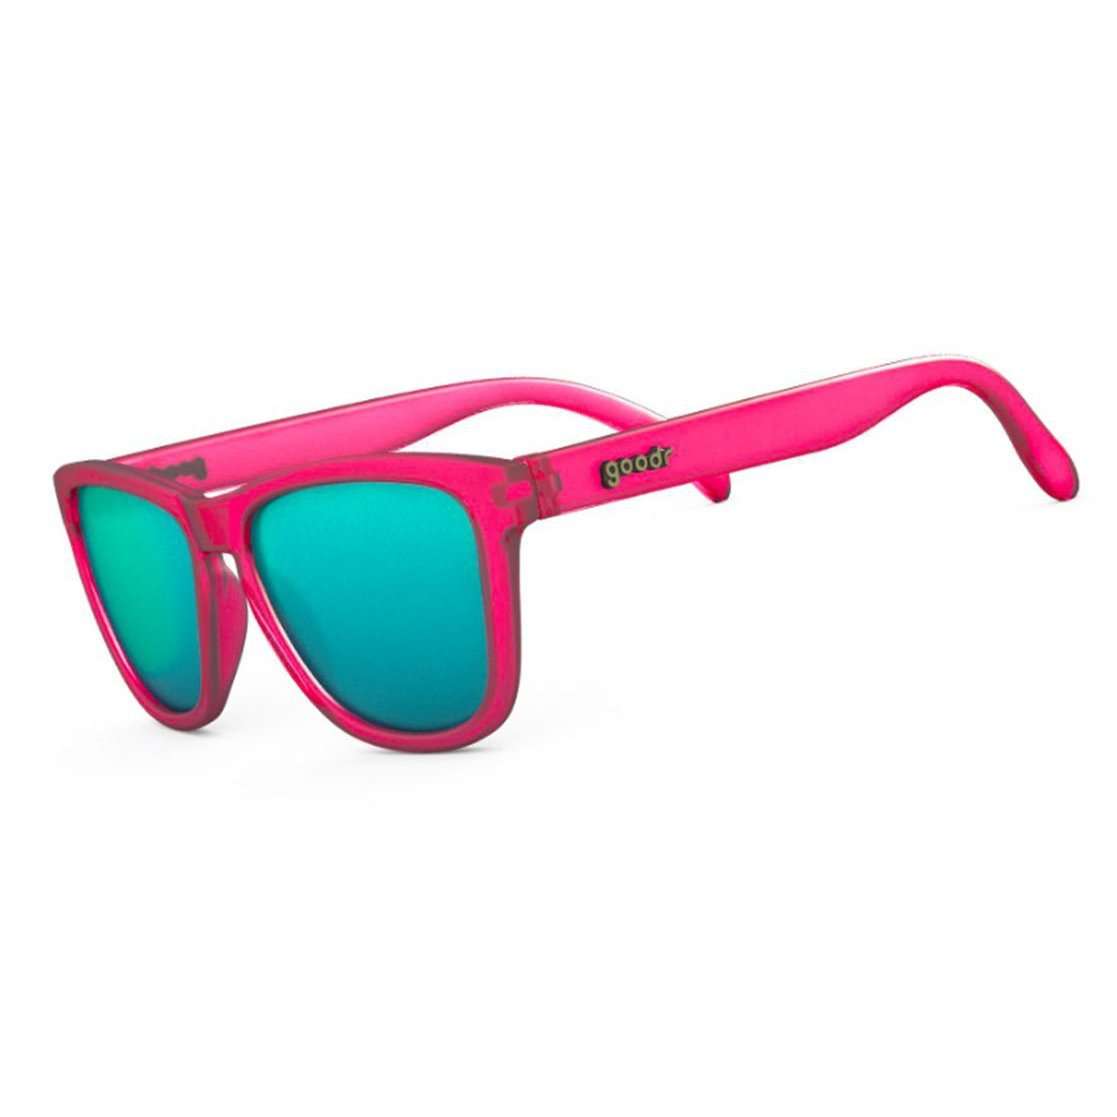 Goodr OG Sunglasses "Flamingos on a Booze Cruise" Sunglasses - BlackToe Running - 